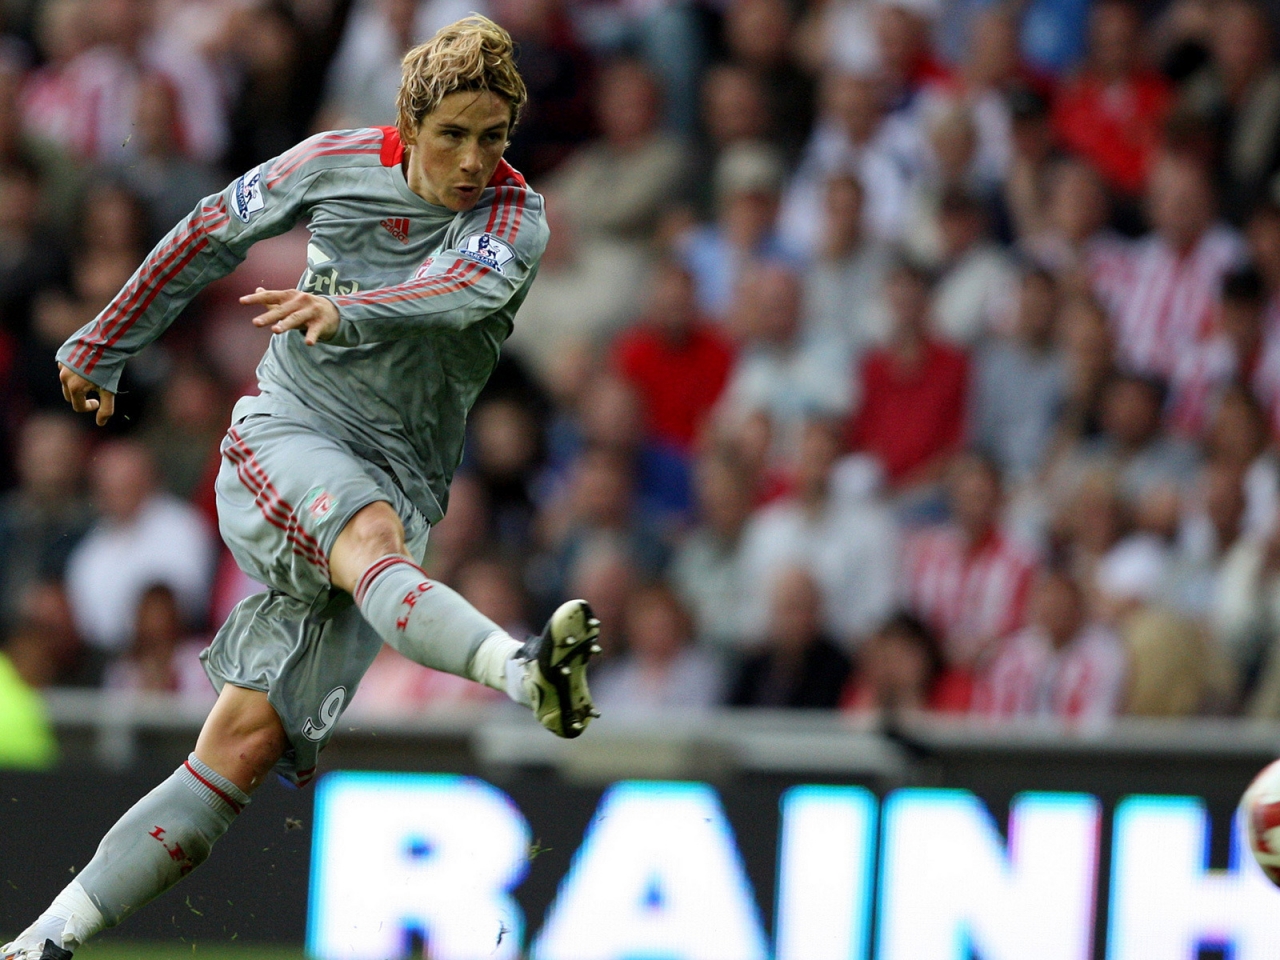 Fernando Torres Player for 1280 x 960 resolution